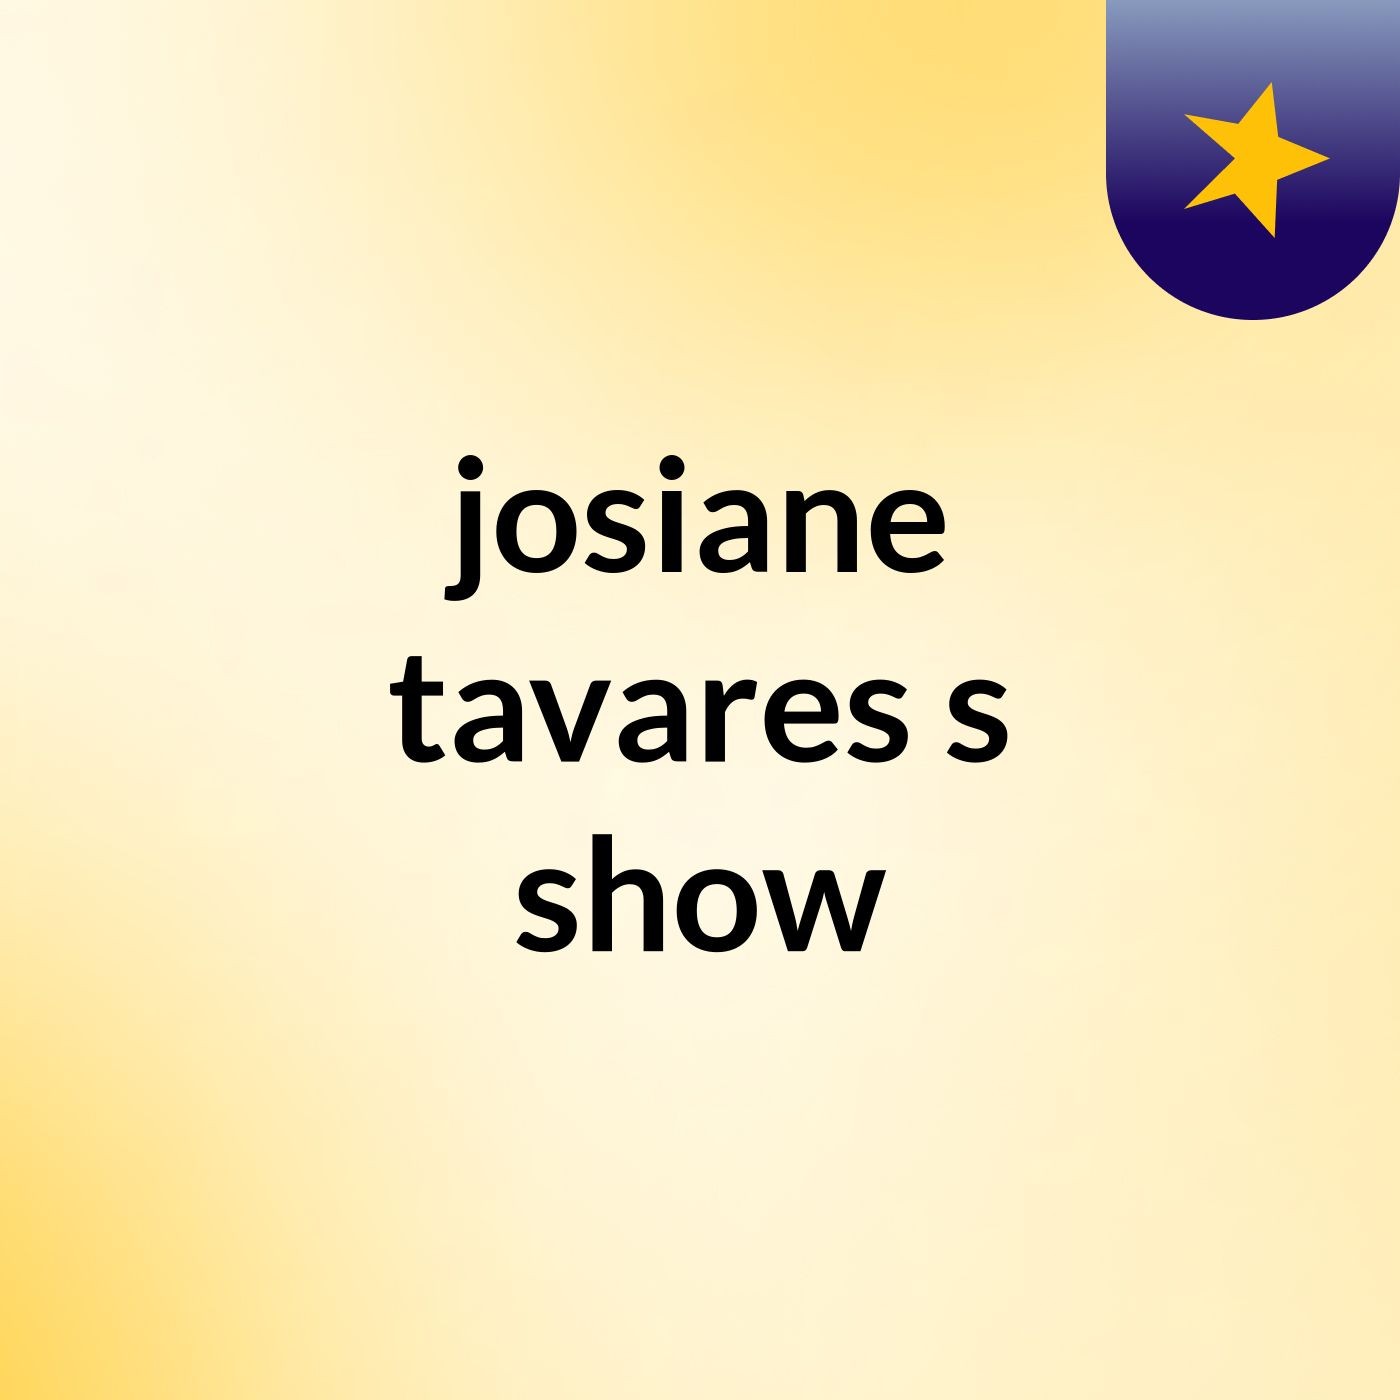 josiane tavares's show